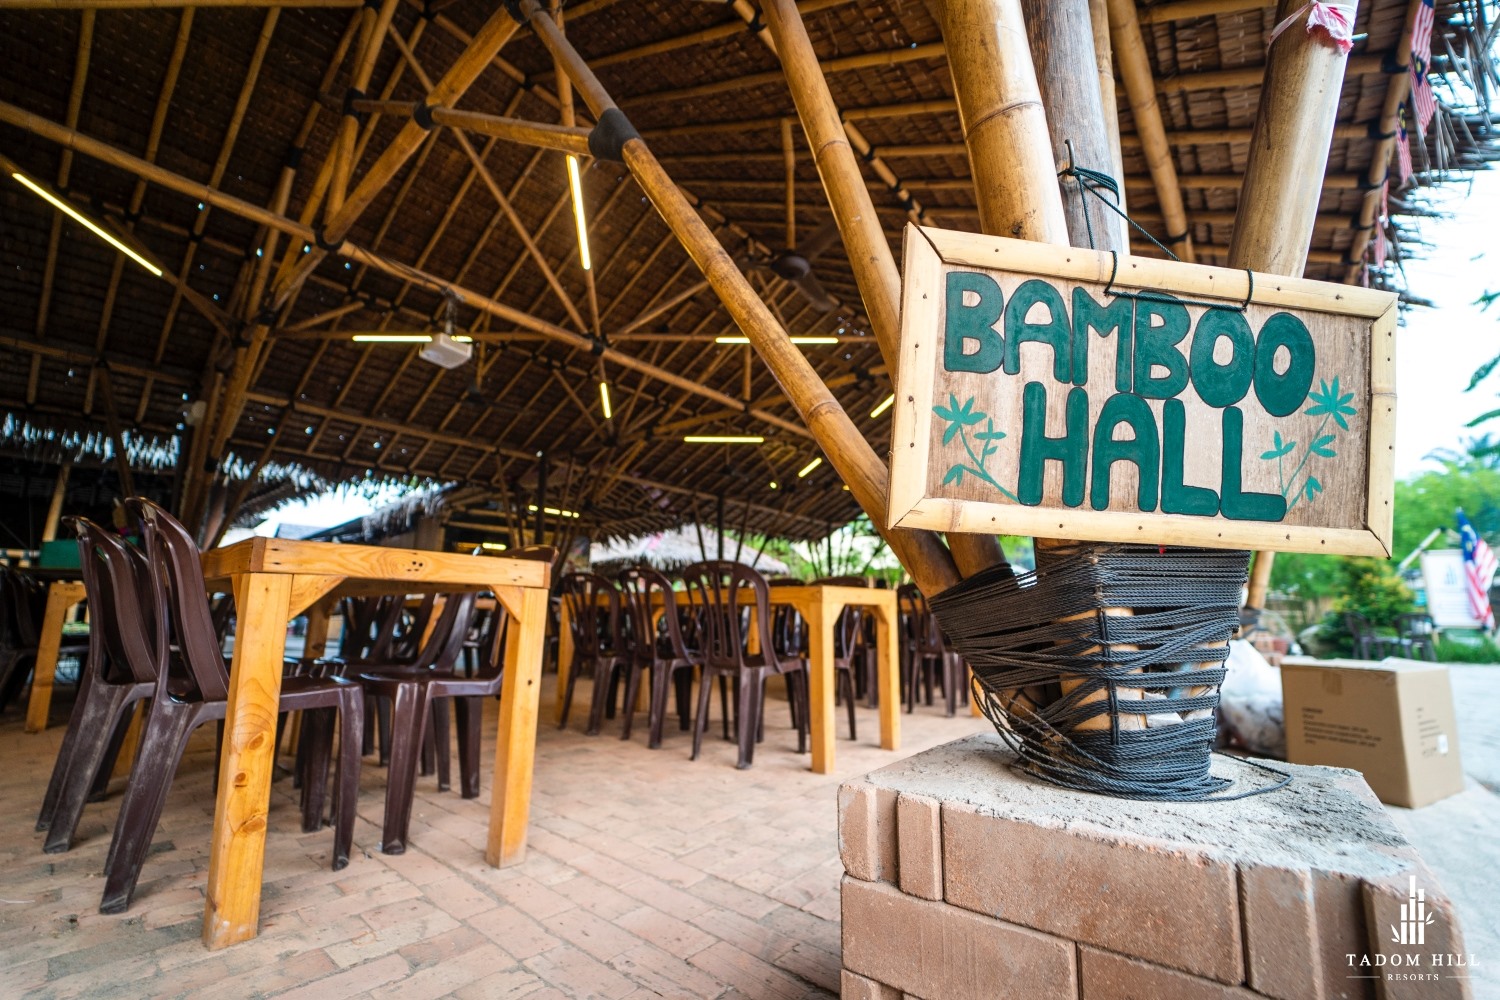 Tadom Hill Resort Bamboo Hall 